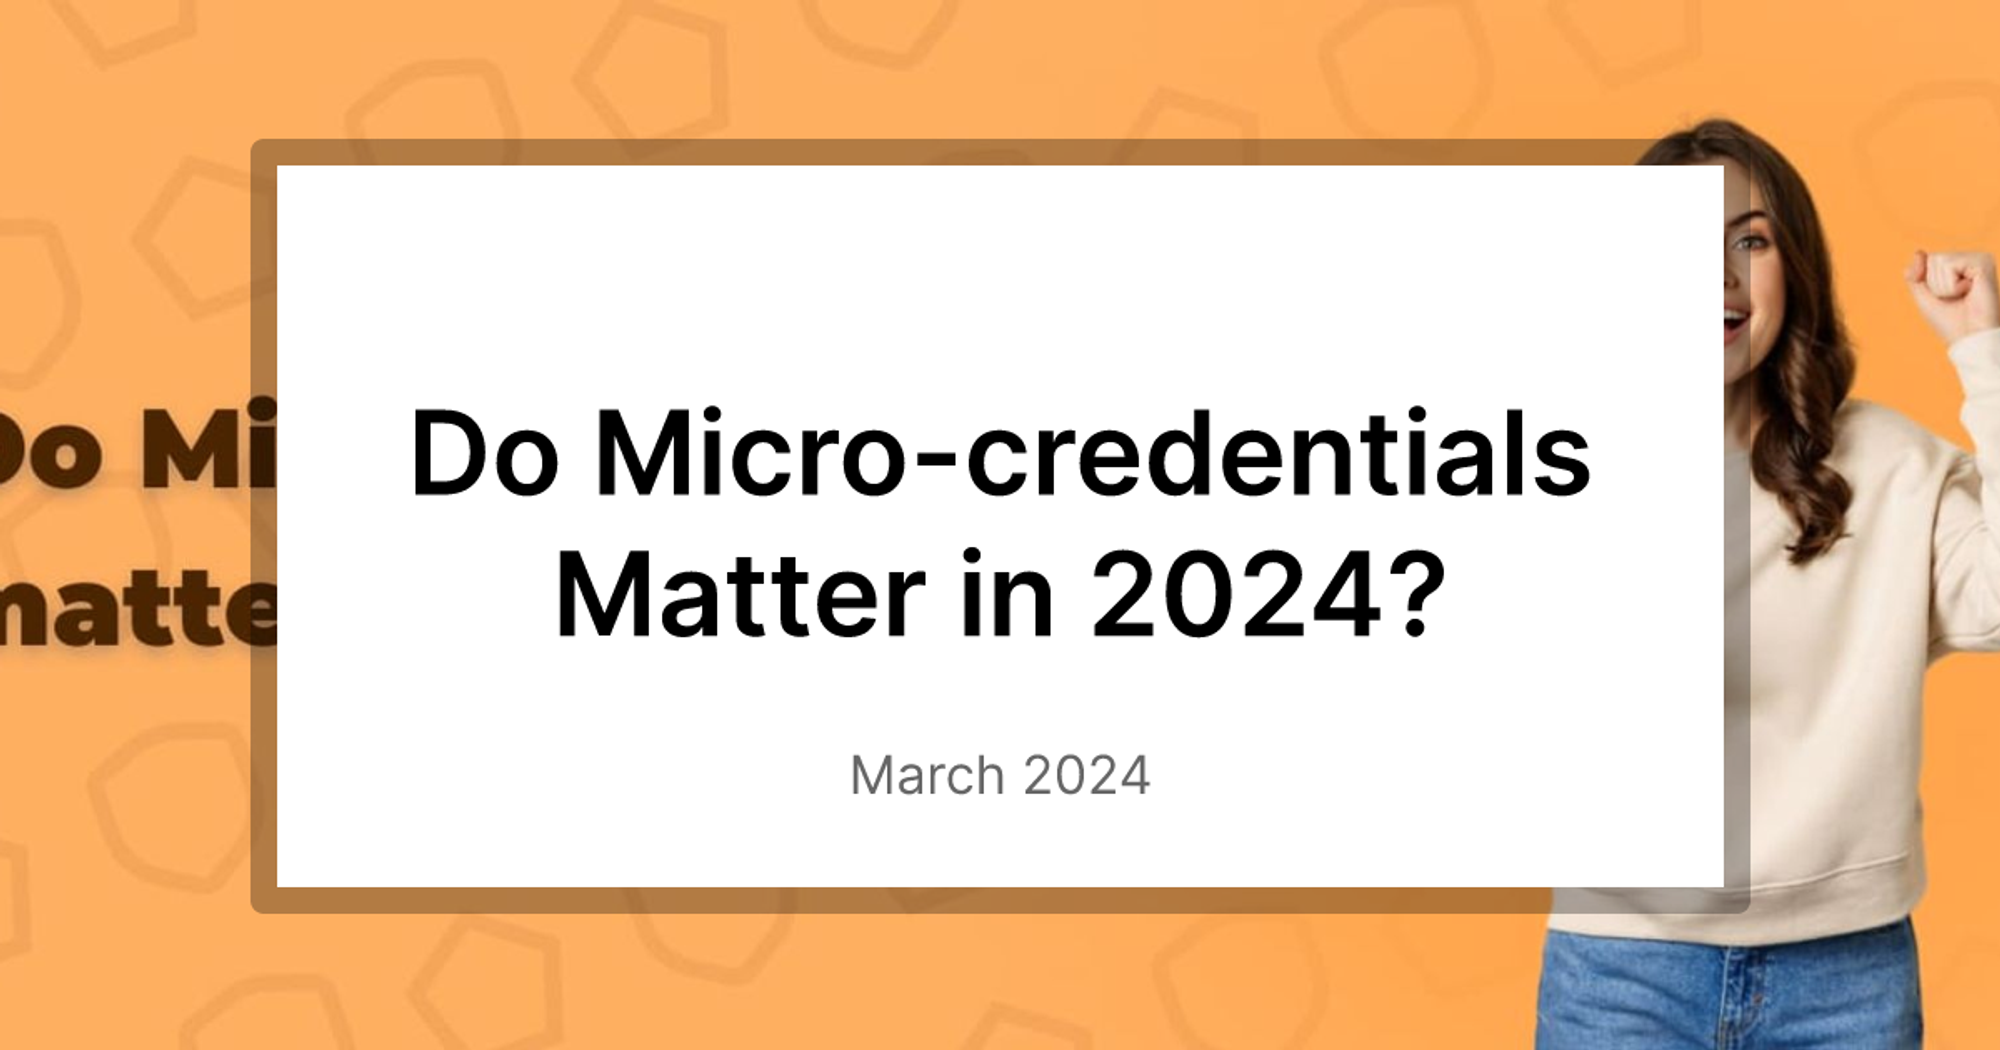 Do Micro-credentials Matter in 2024?